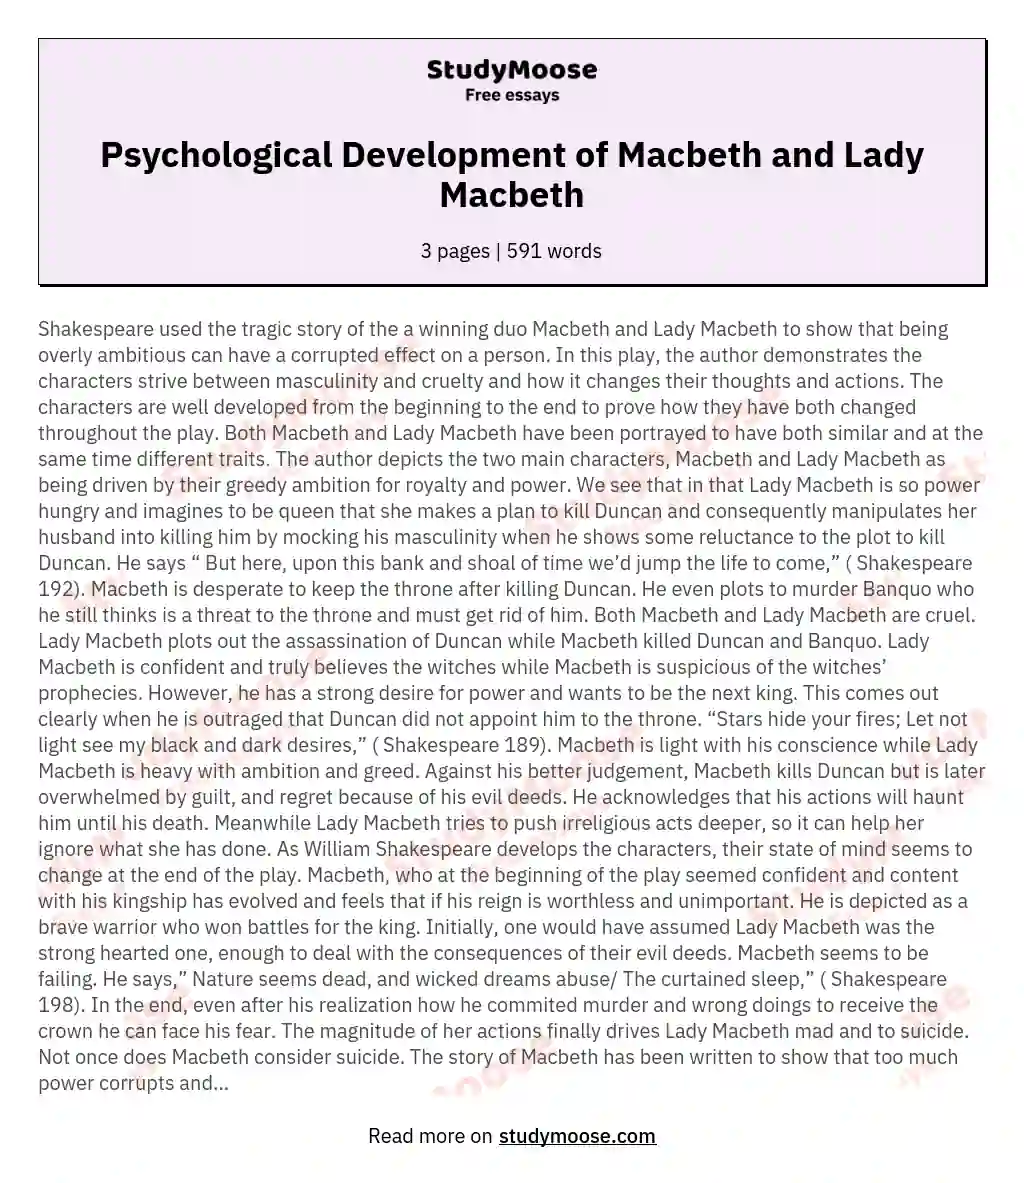 Psychological Development of Macbeth and Lady Macbeth